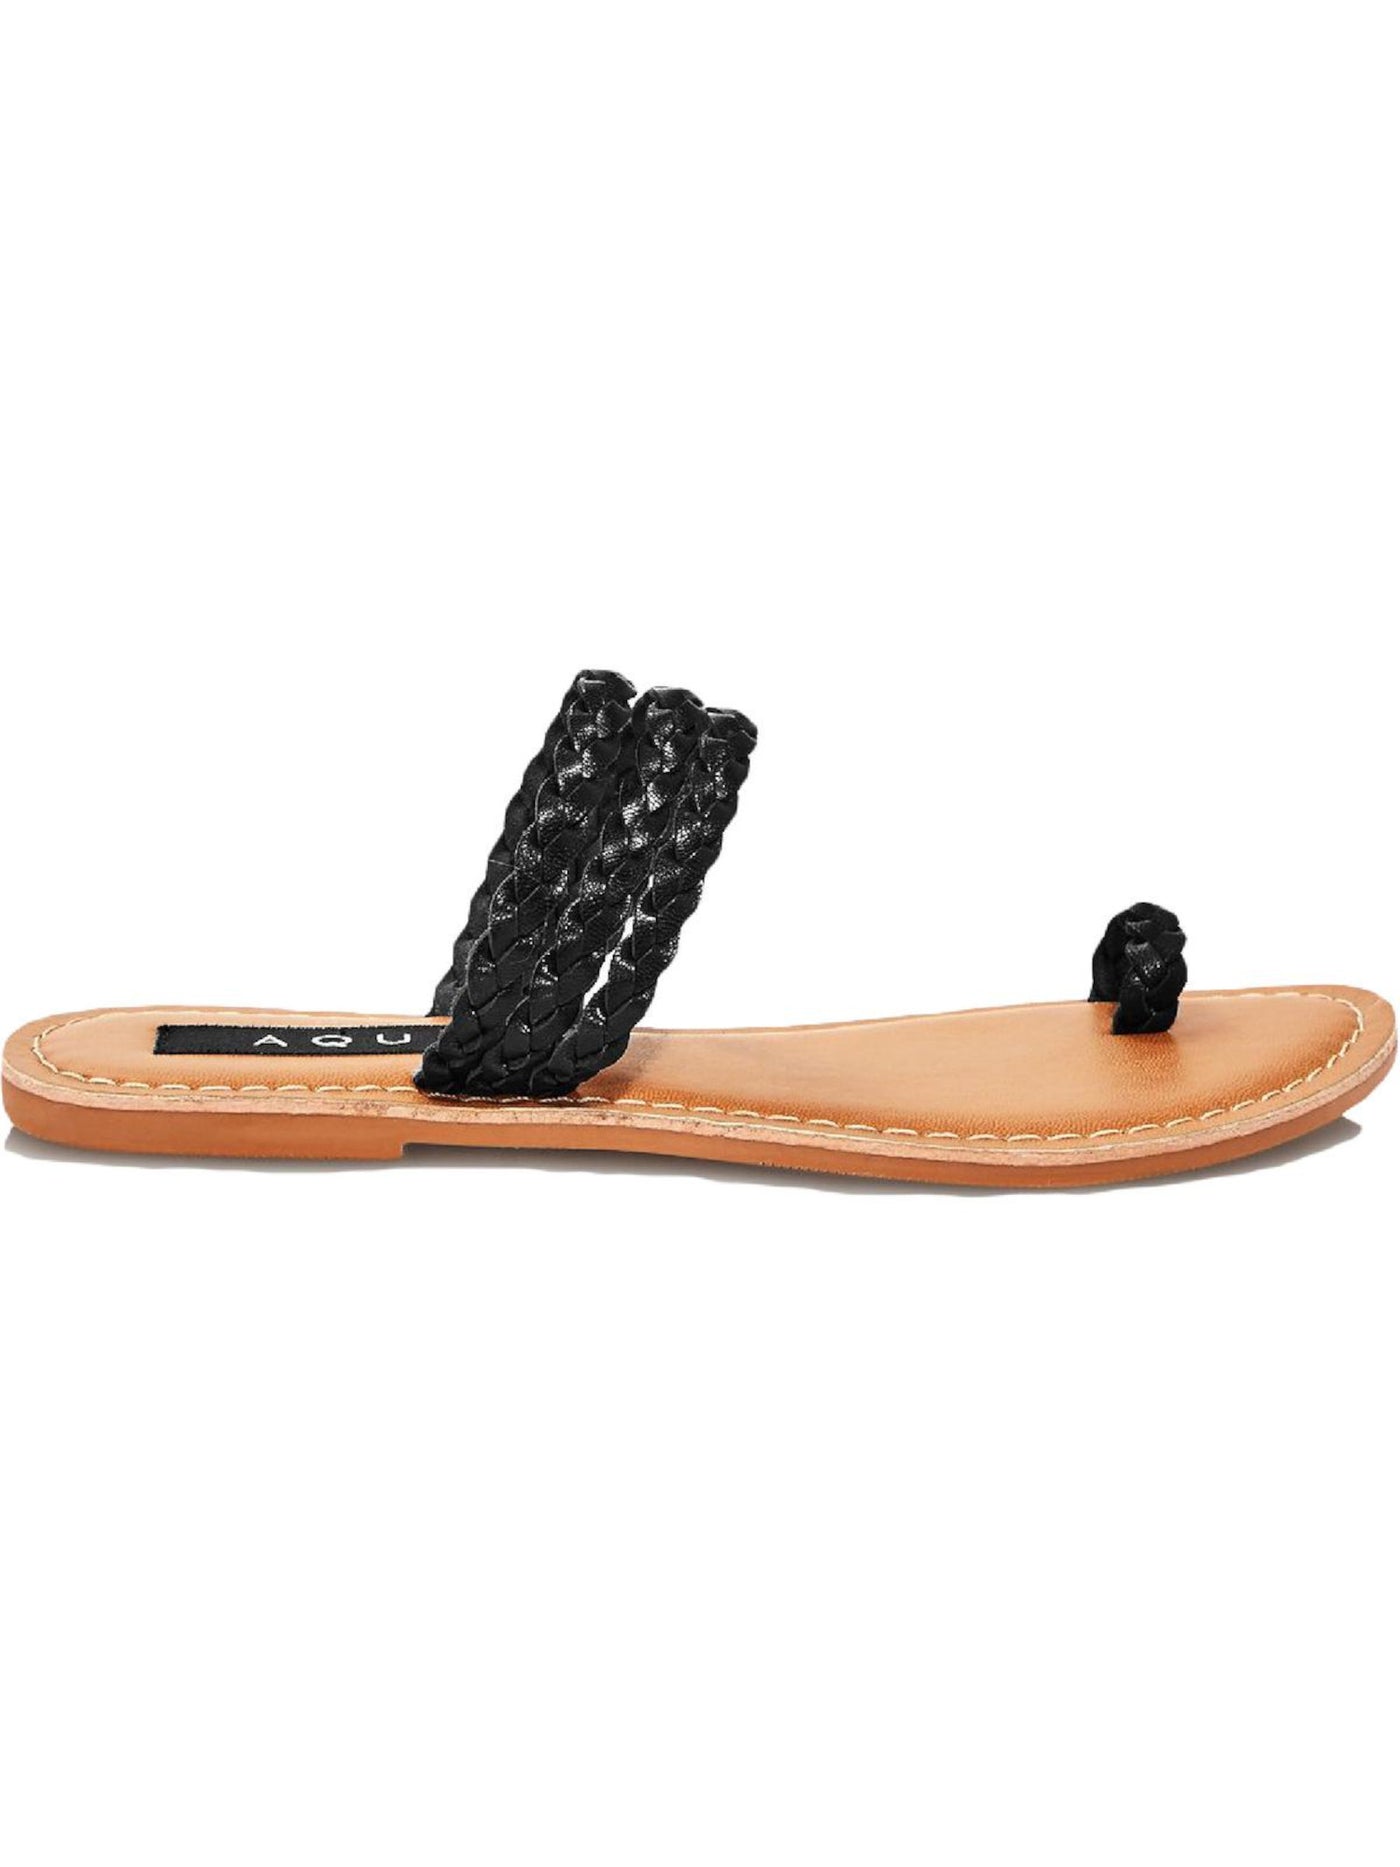 AQUA Womens Black Toe-Loop Cushioned Braided Slay Open Toe Slip On Leather Slide Sandals Shoes 6.5 M